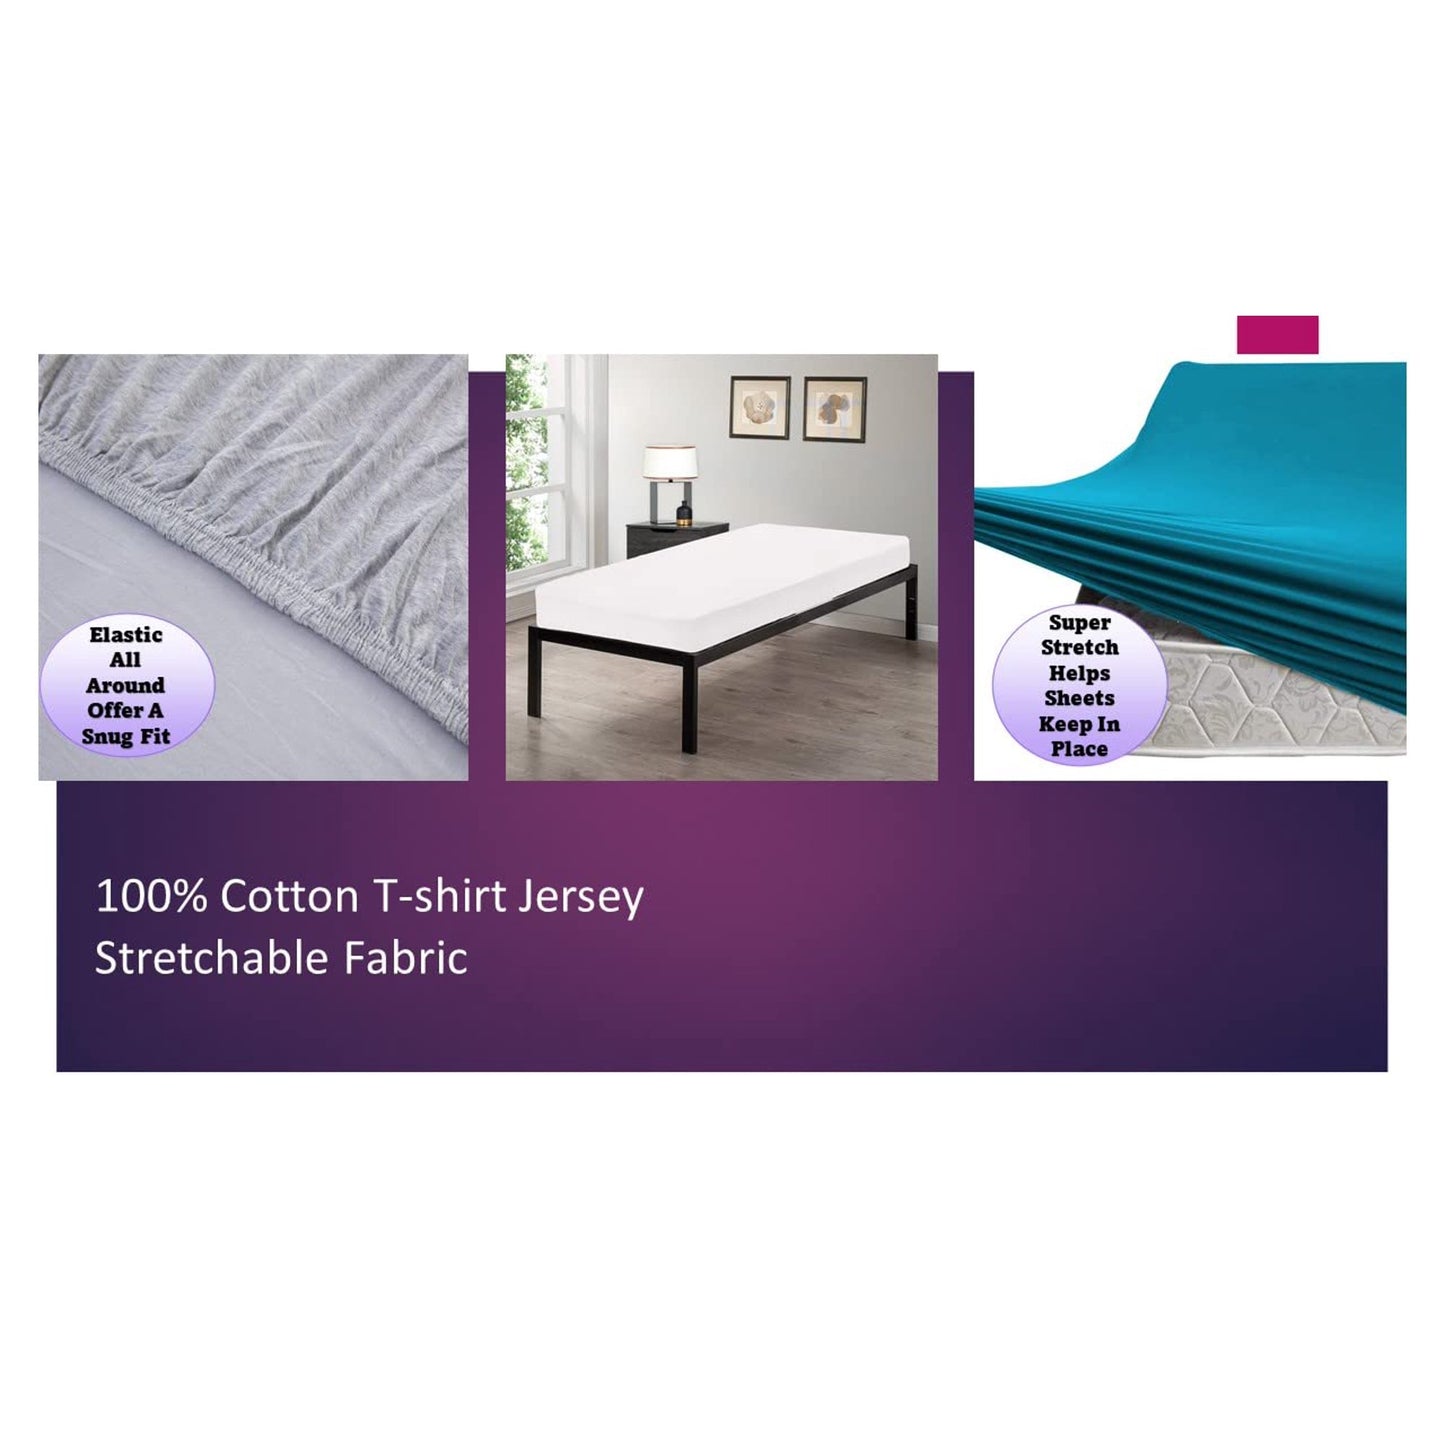 100% Combed T-Shirt Cotton Jersey Knit Camp Sheet Set, 1 Fitted cot Sheet, 1 Flat Sheet, 1 Standard Pillow case Twin Size 39"X75", Royal Blue